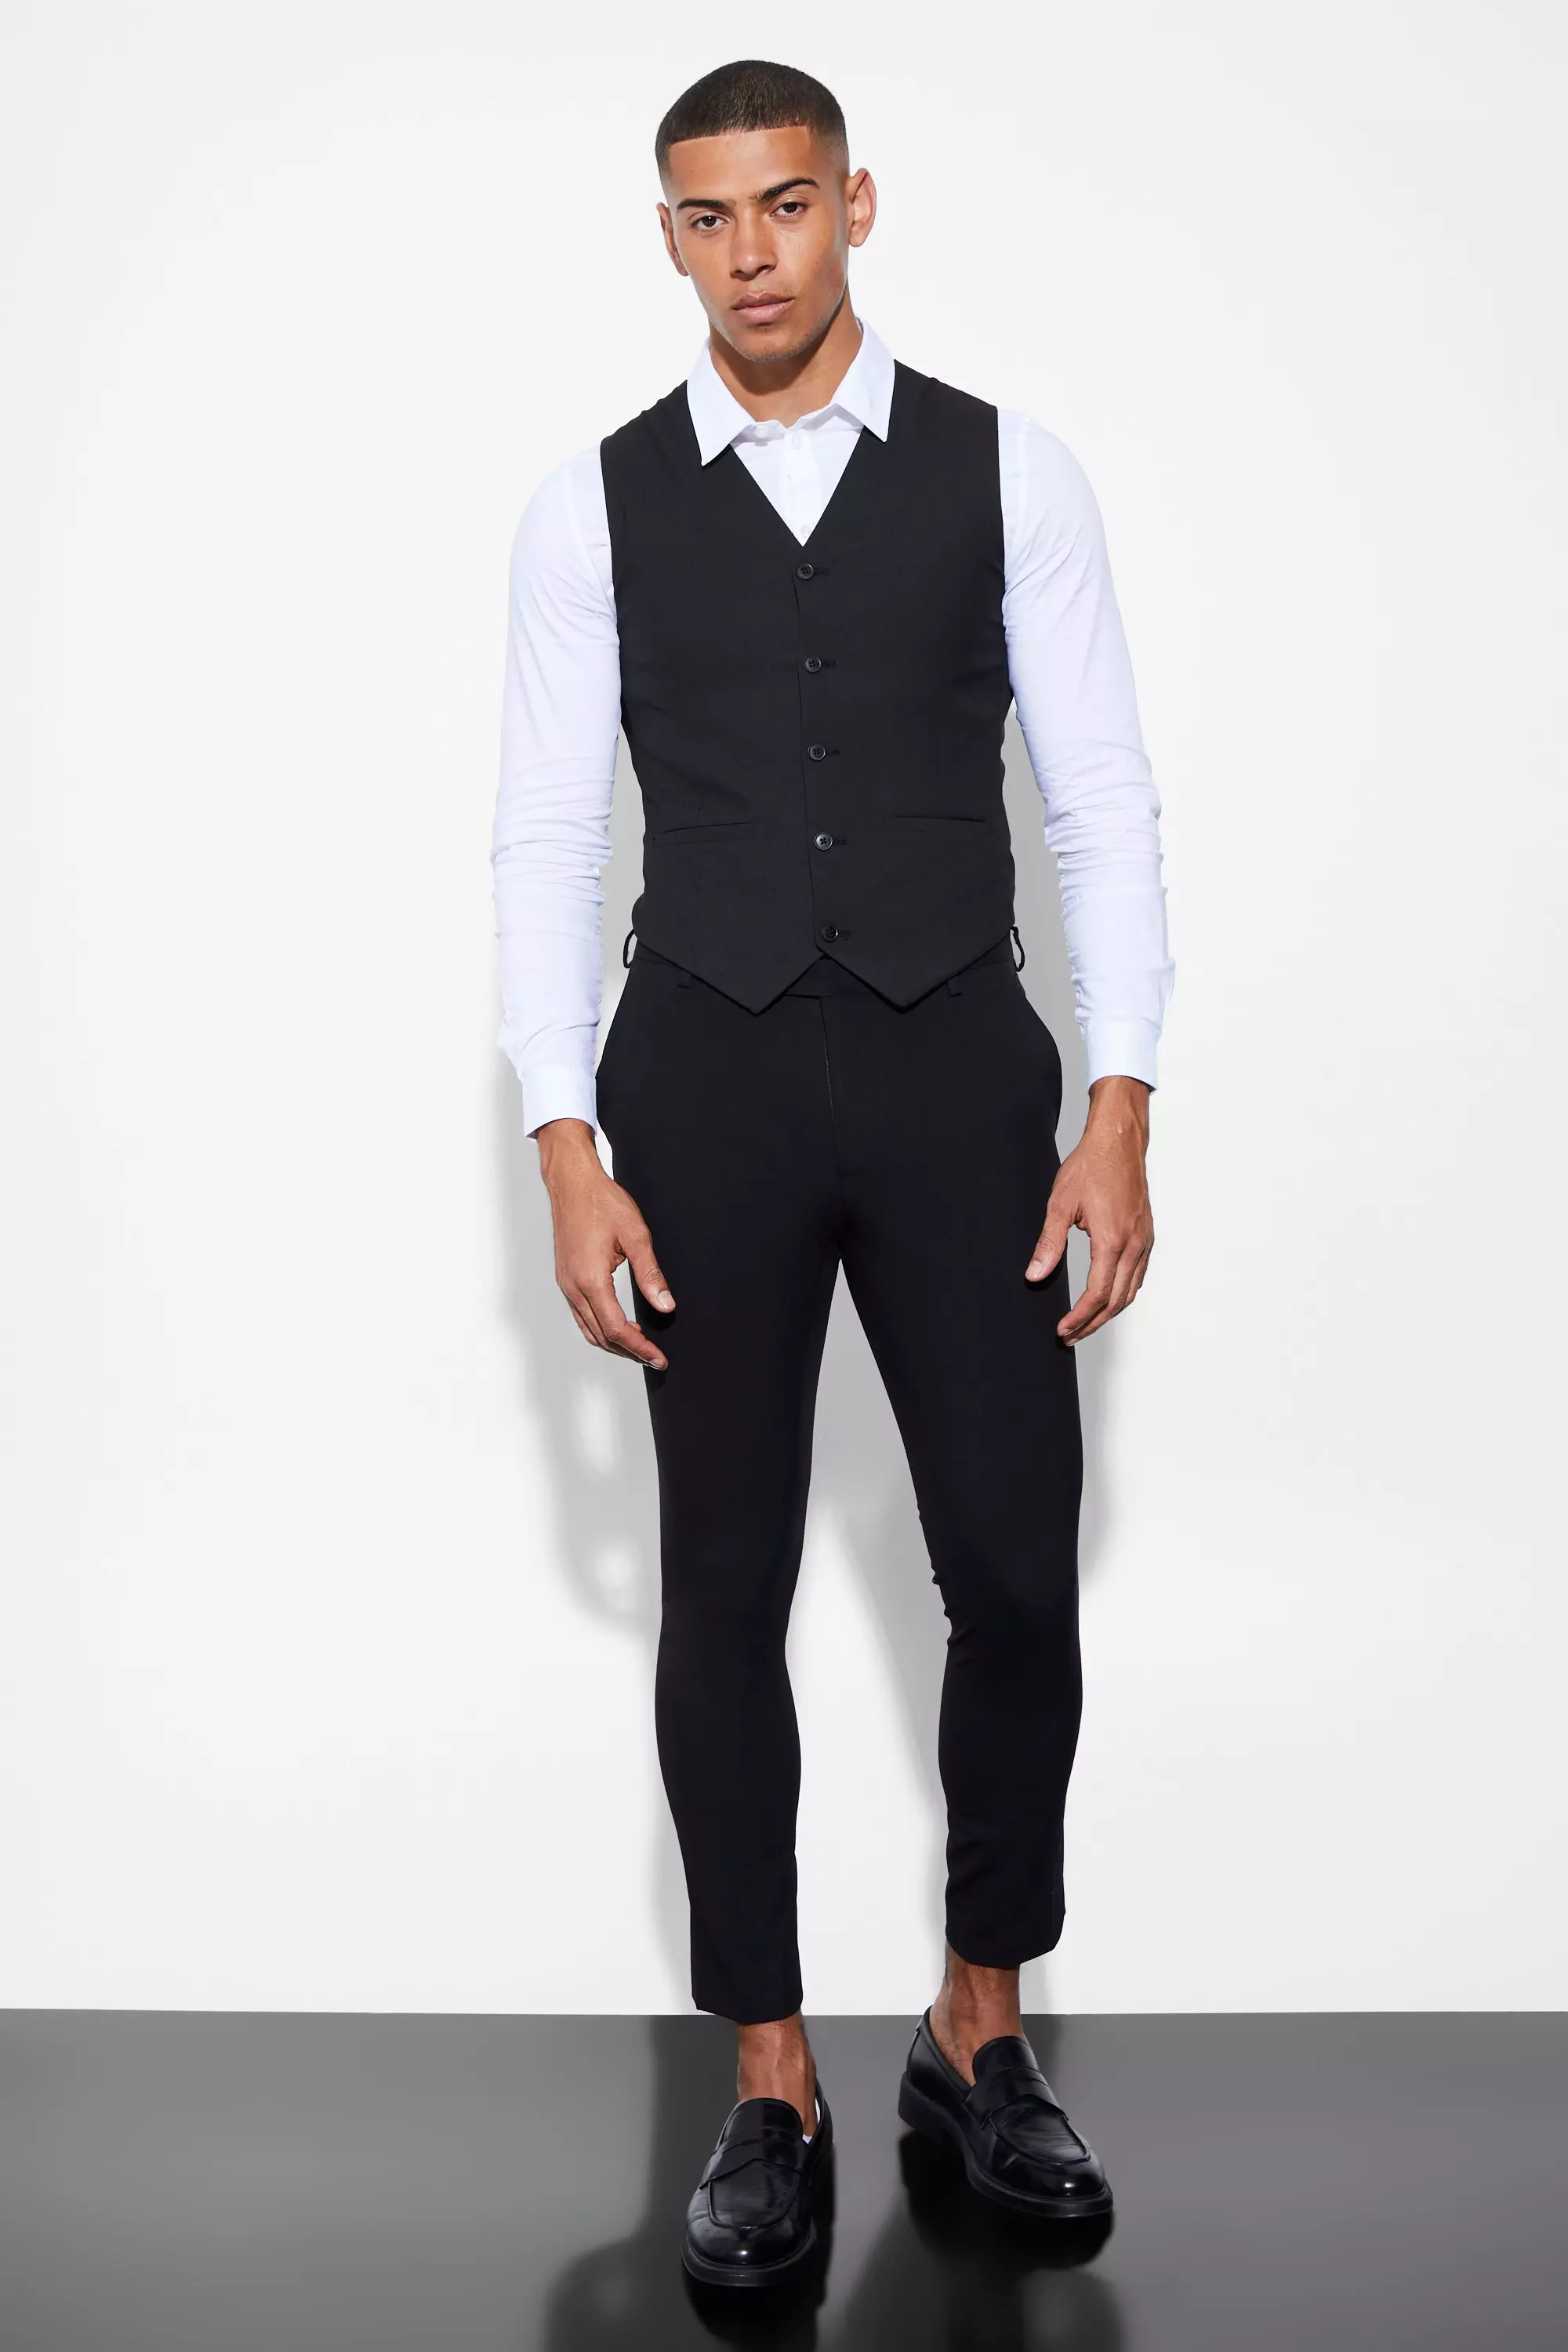 Black Super Skinny Suit Trousers